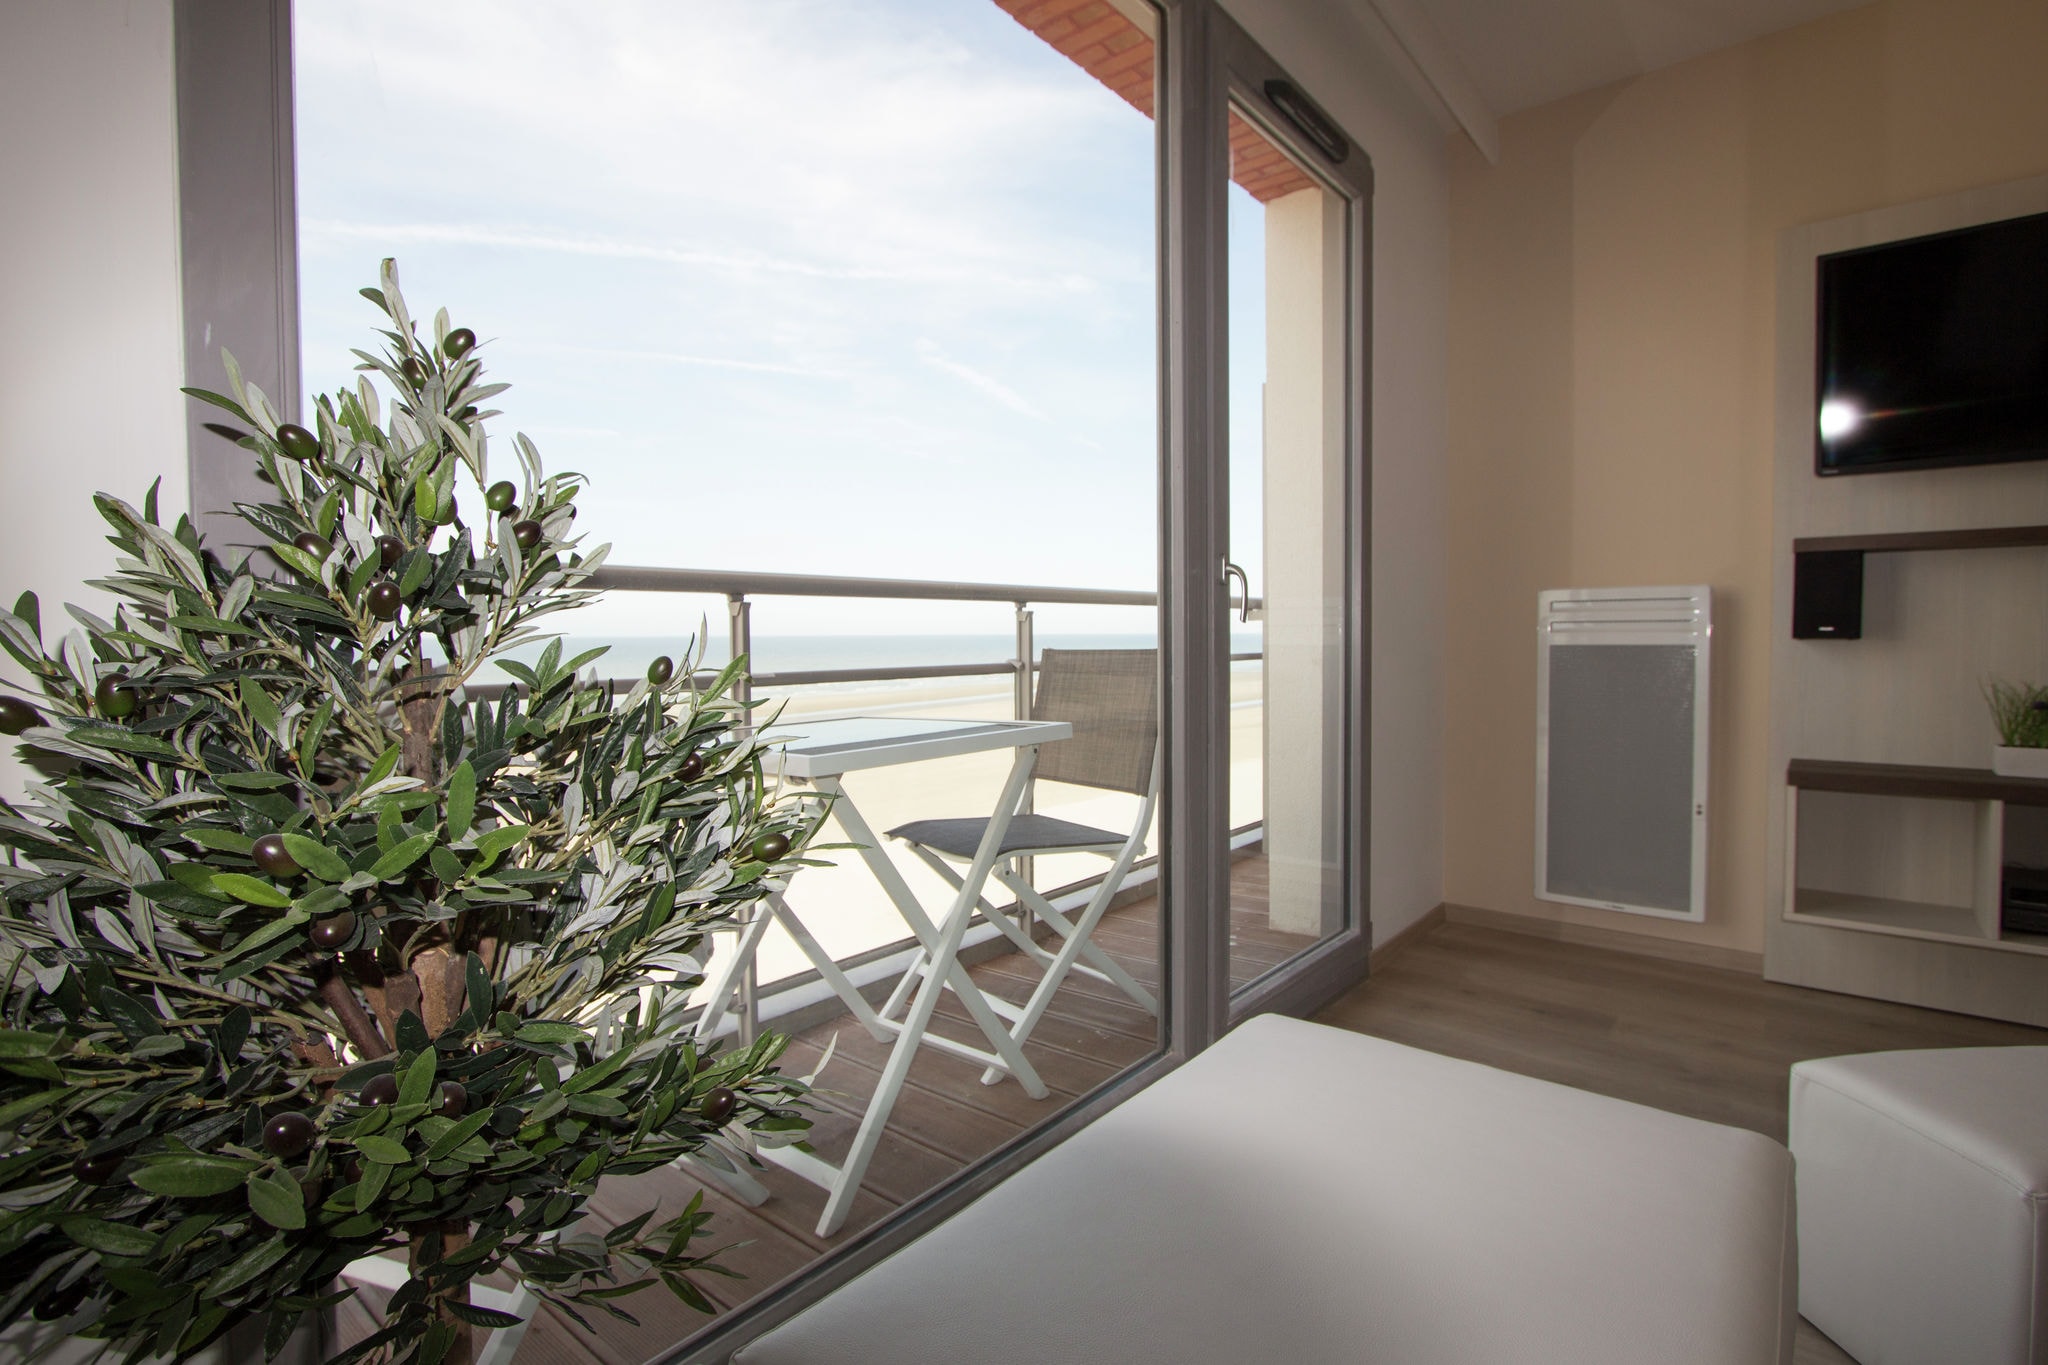 Modern beachside apartment in Bray-Dunes close to De Panne